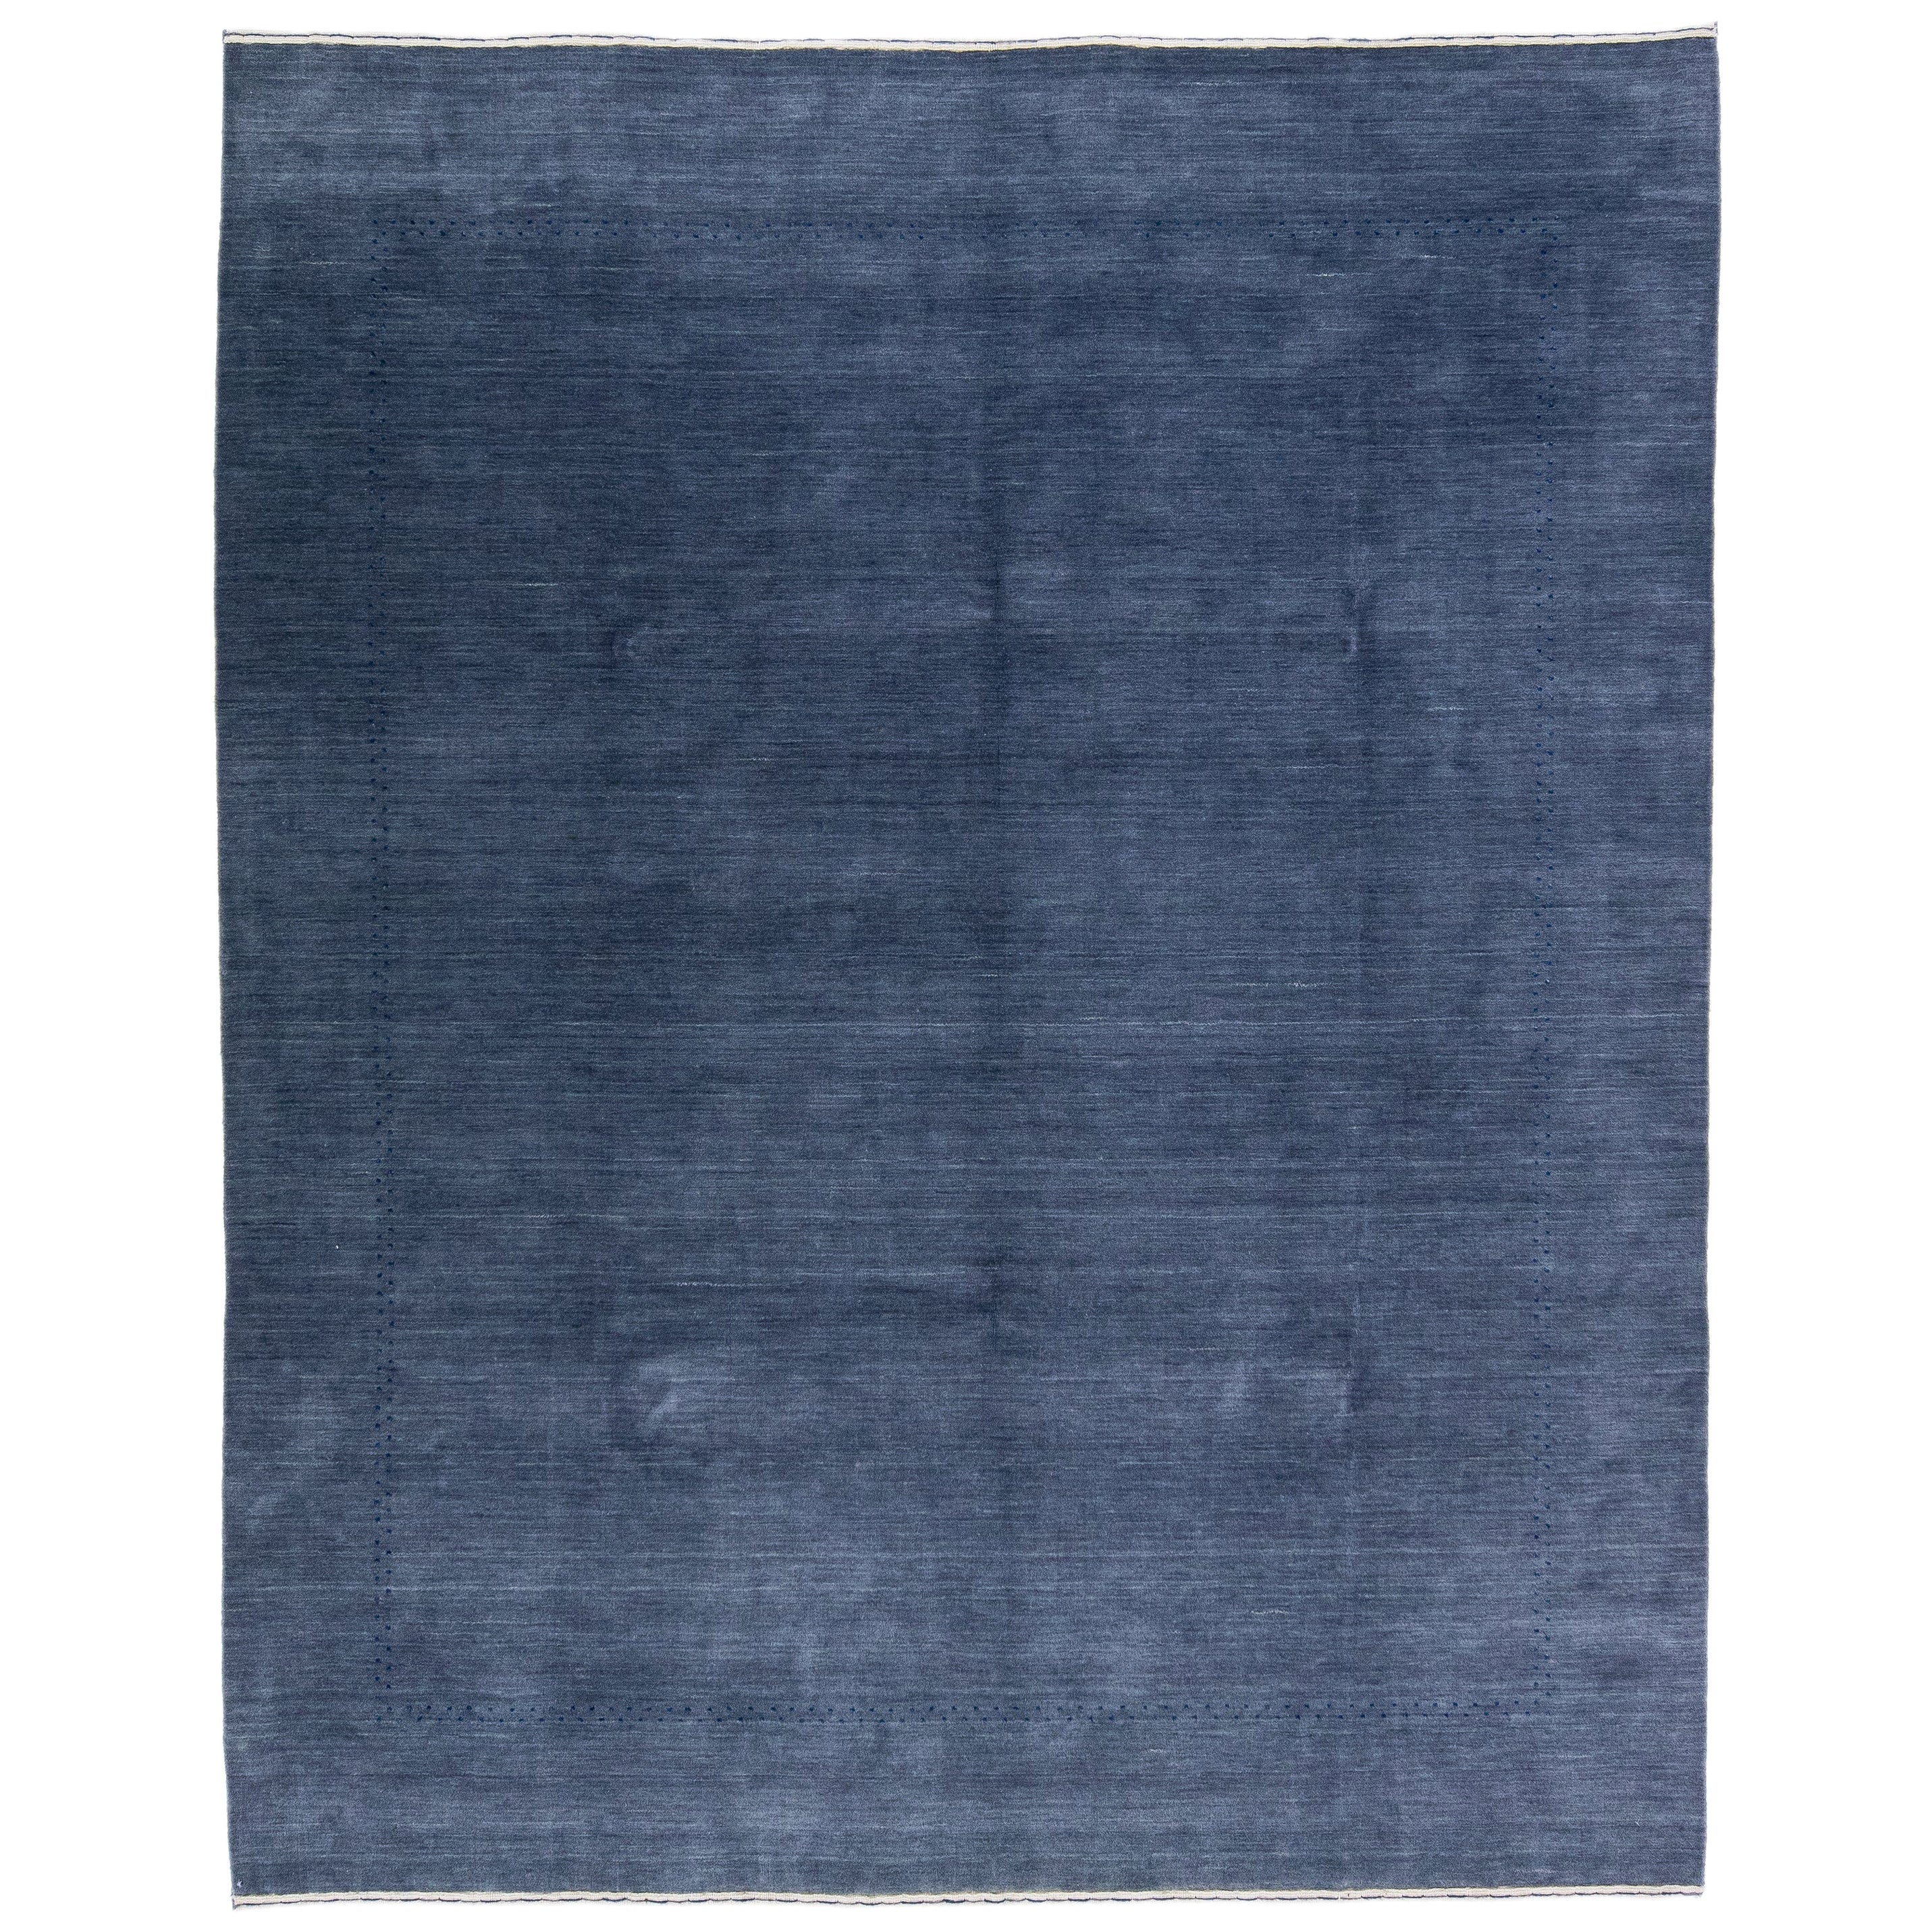 Modern Blue Gabbeh Hand-Loom Wool Rug with Minimal Design